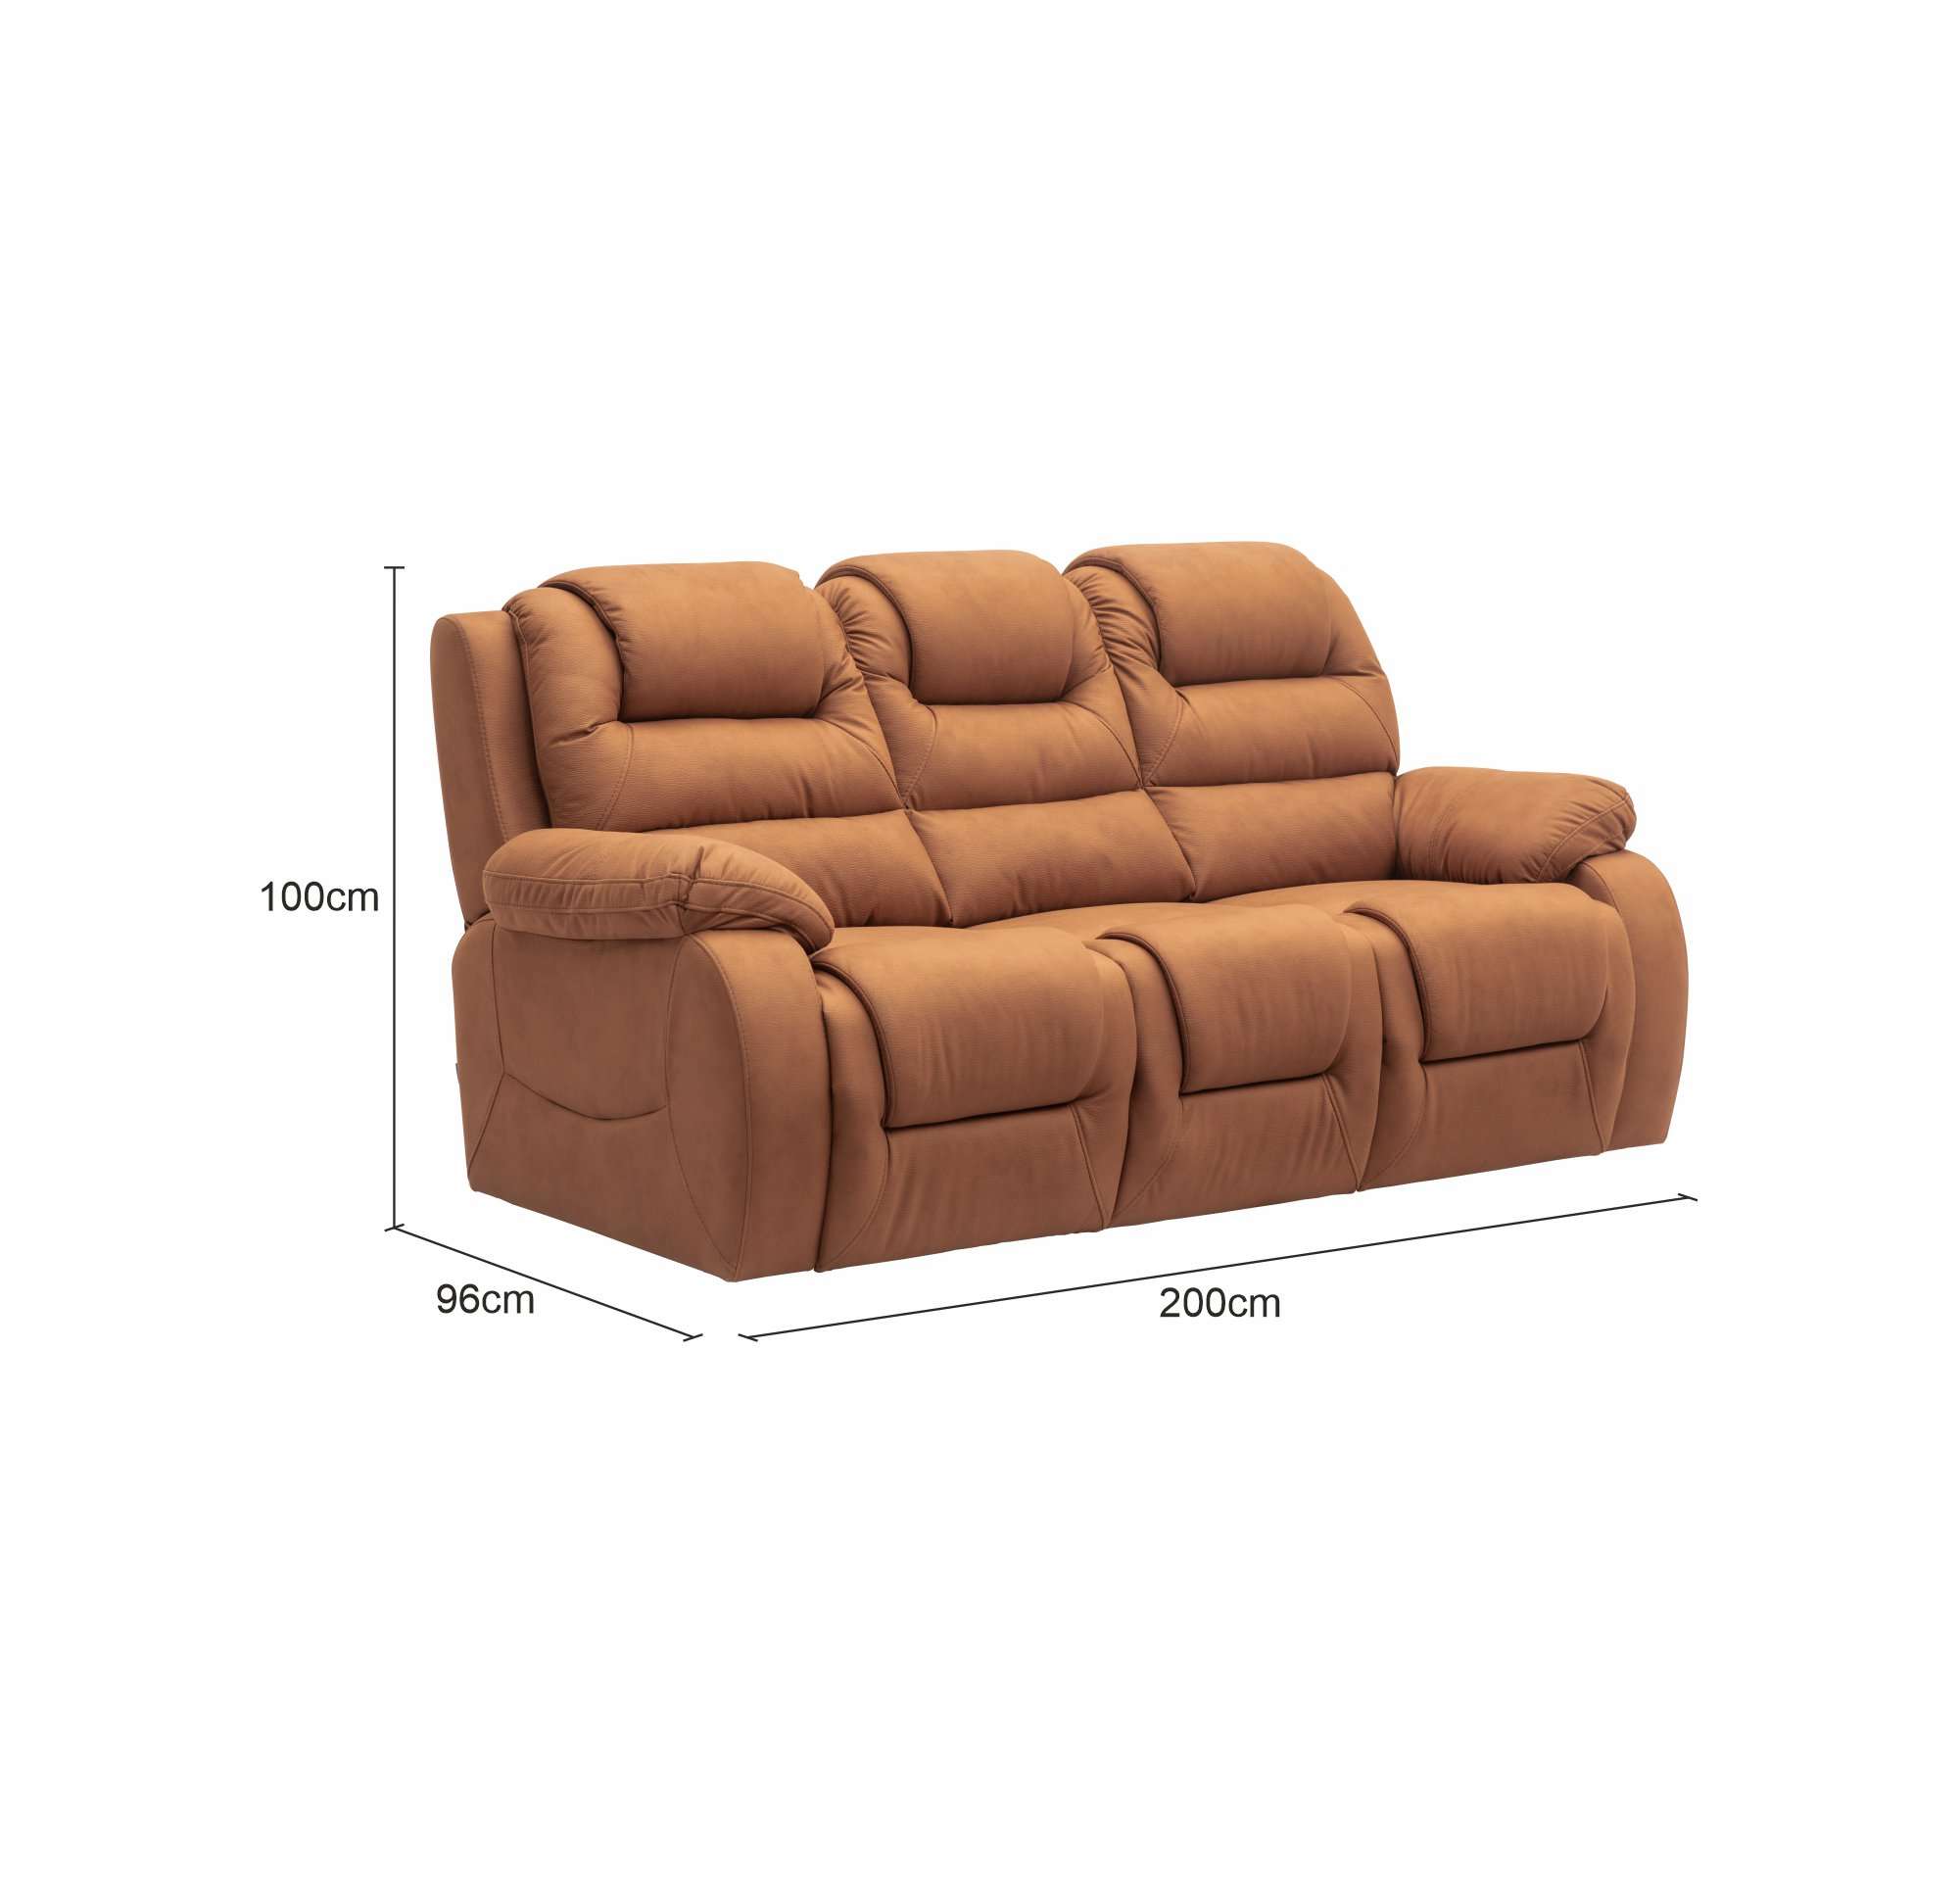 SSC003+1R+1R-Sinclair Sofa Set With Recliner-NZ02